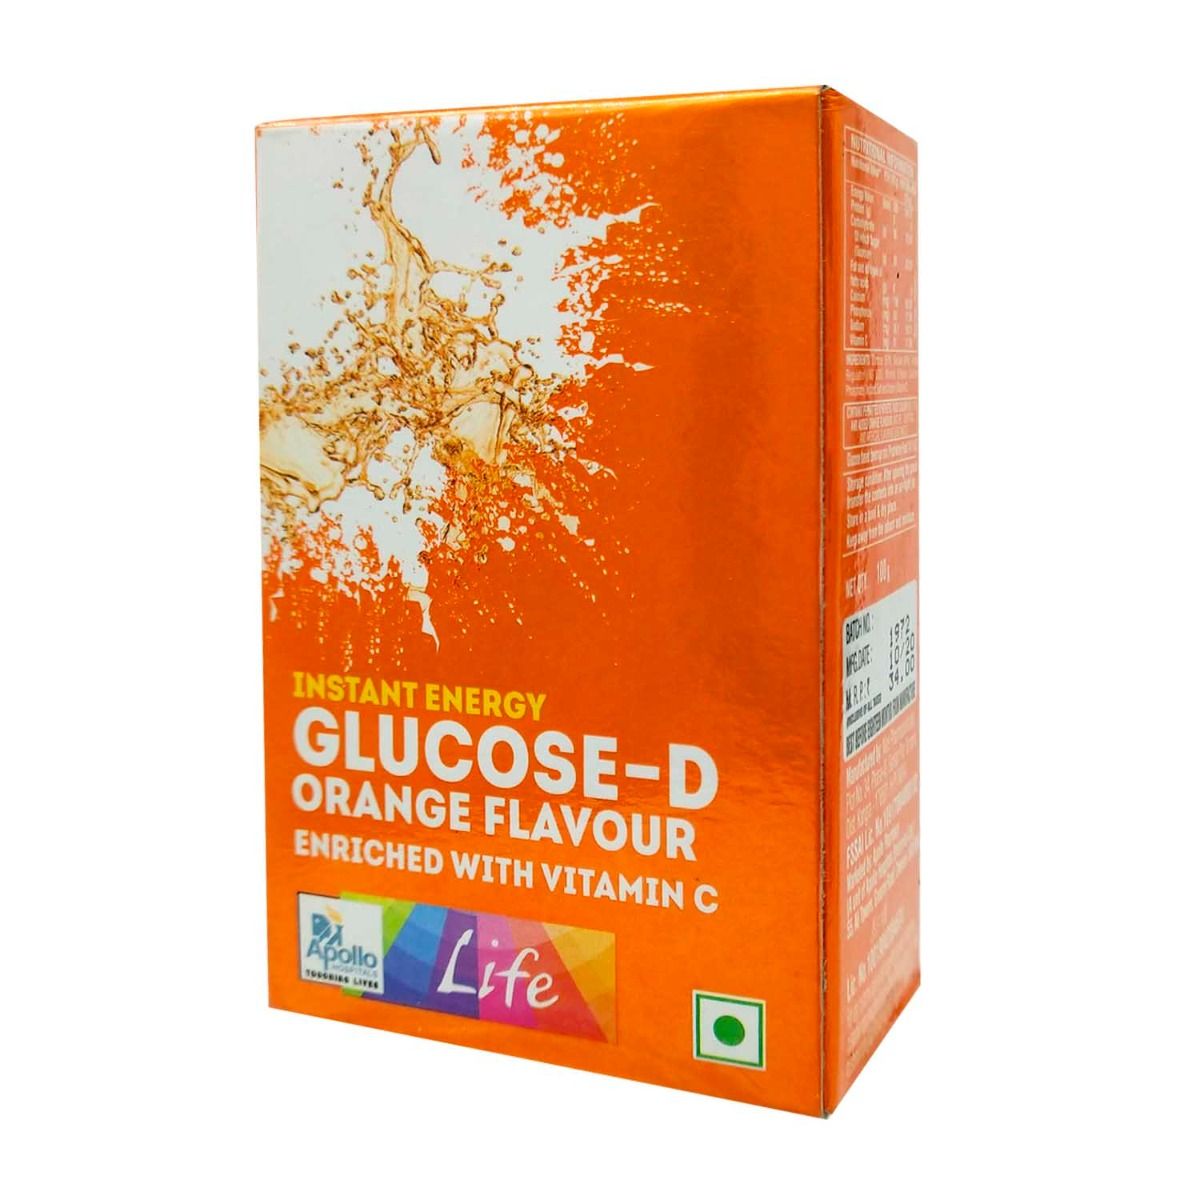 Buy Apollo Life Glucose-D Instant Energy Orange Flavour Drink, 100 gm Online